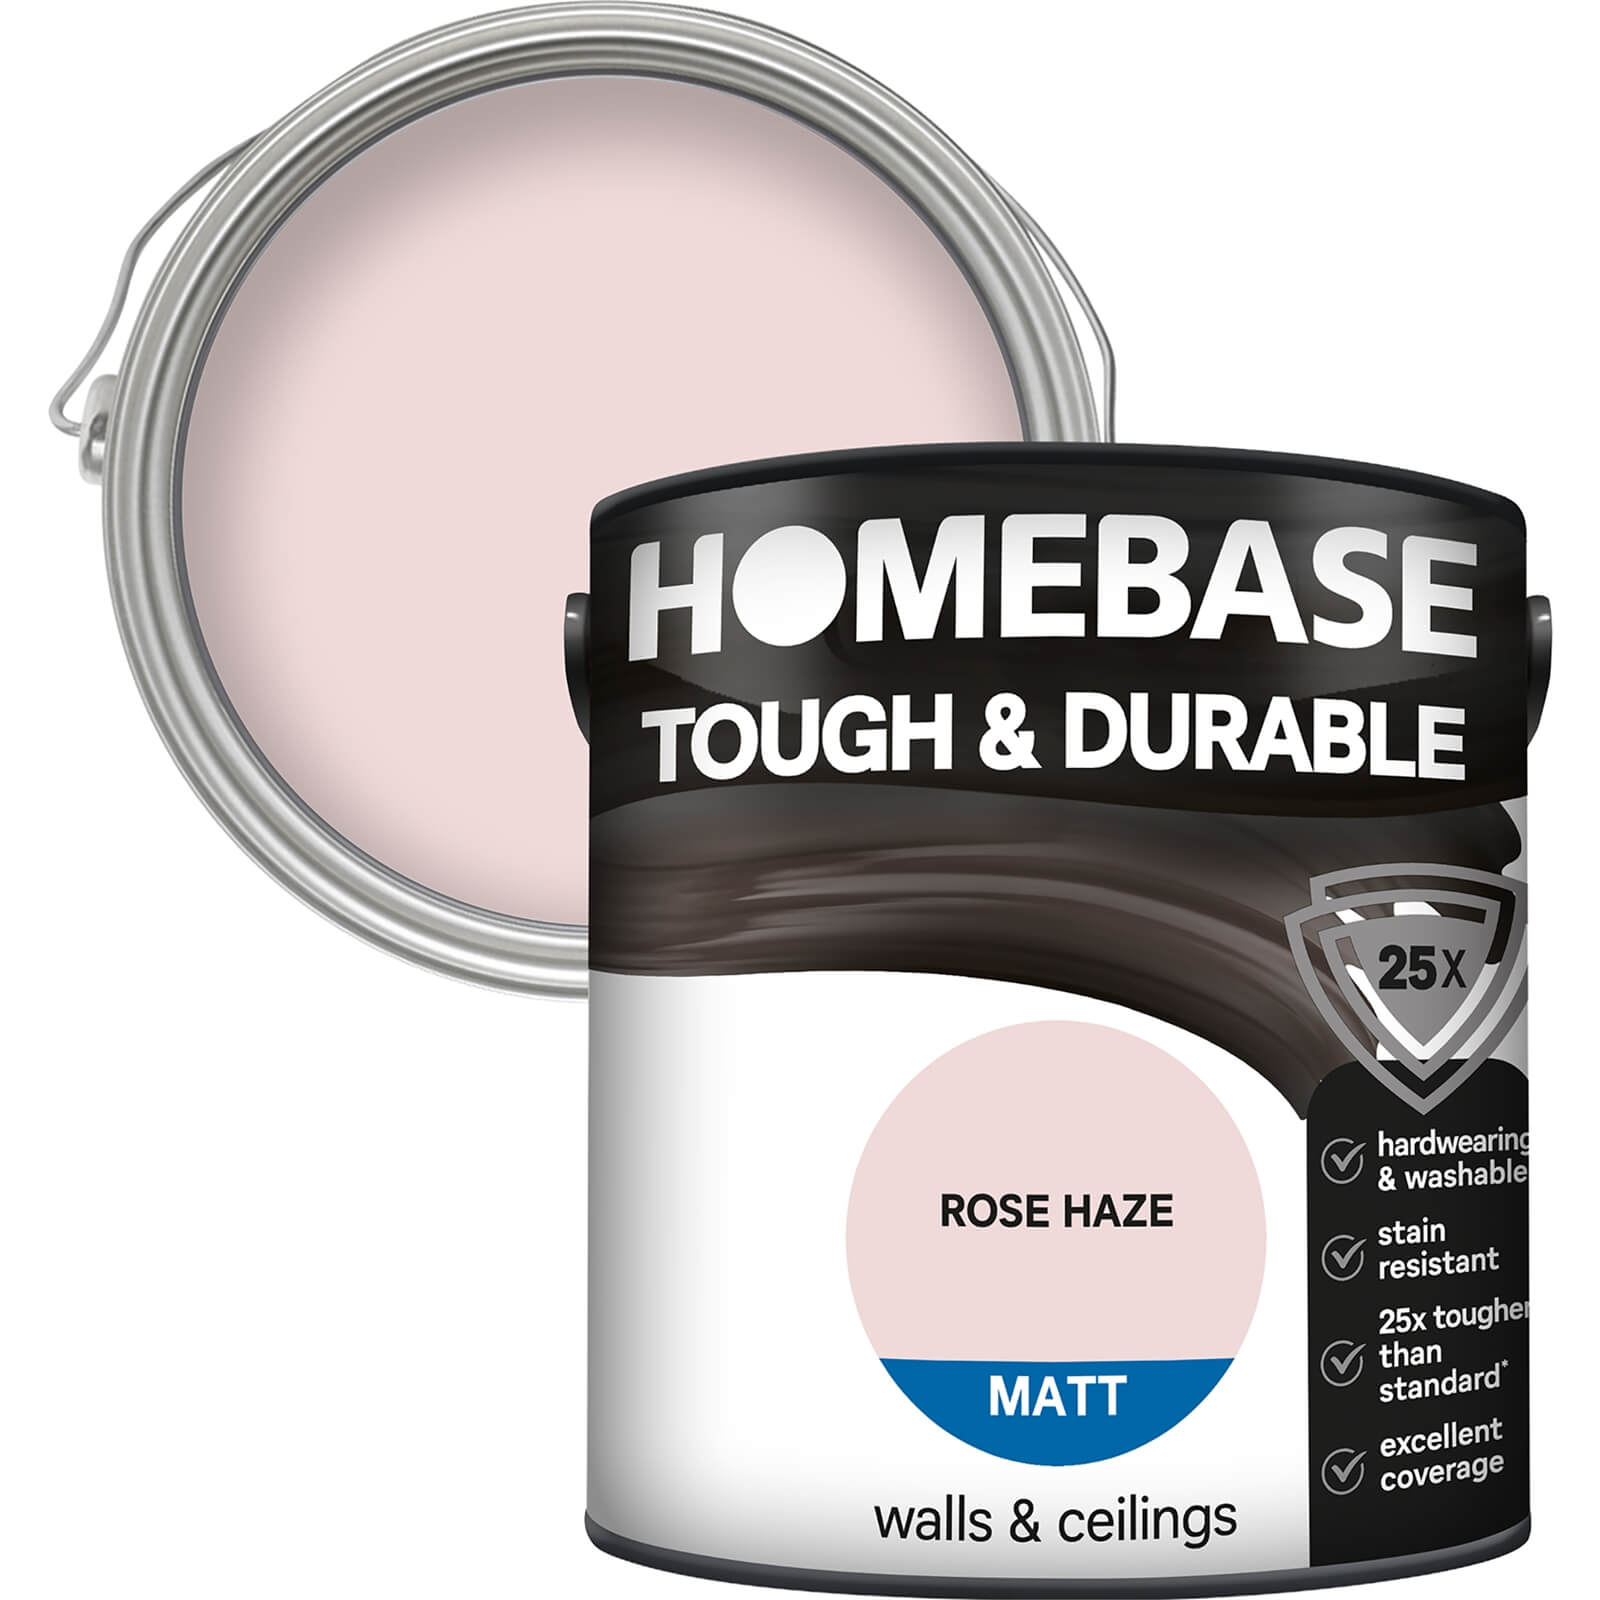 Homebase Tough & Durable Matt Paint Rose Haze - 2.5L